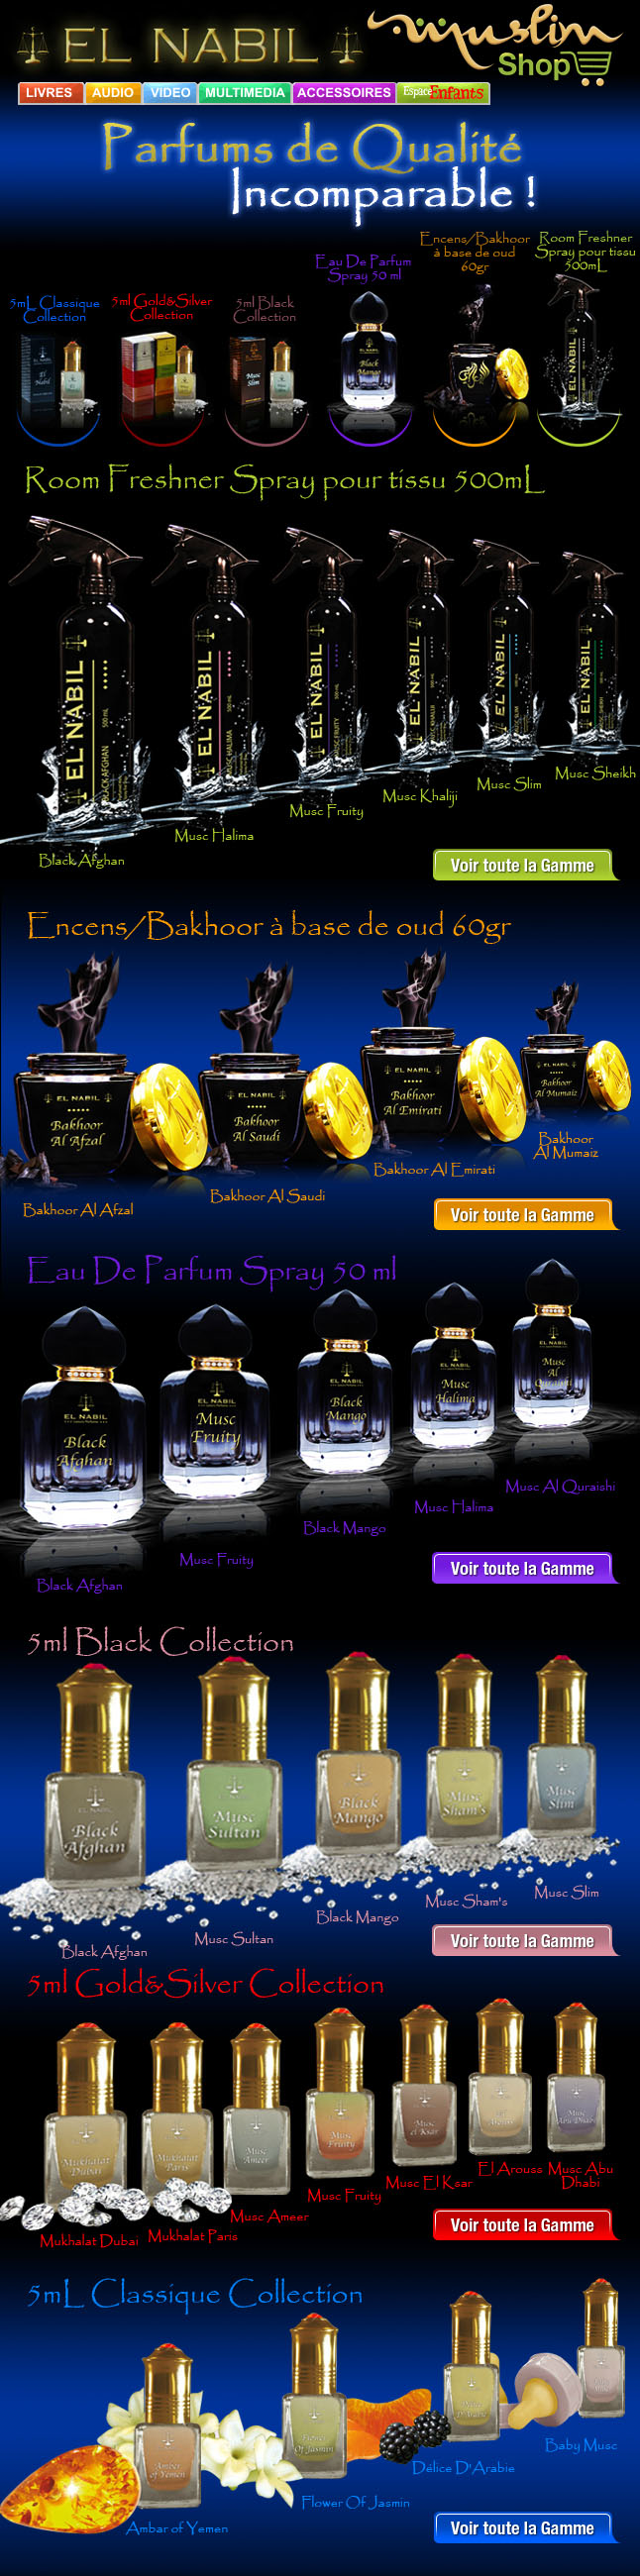 Nouvelles gammes de parfums et desodorisants El-Nabil